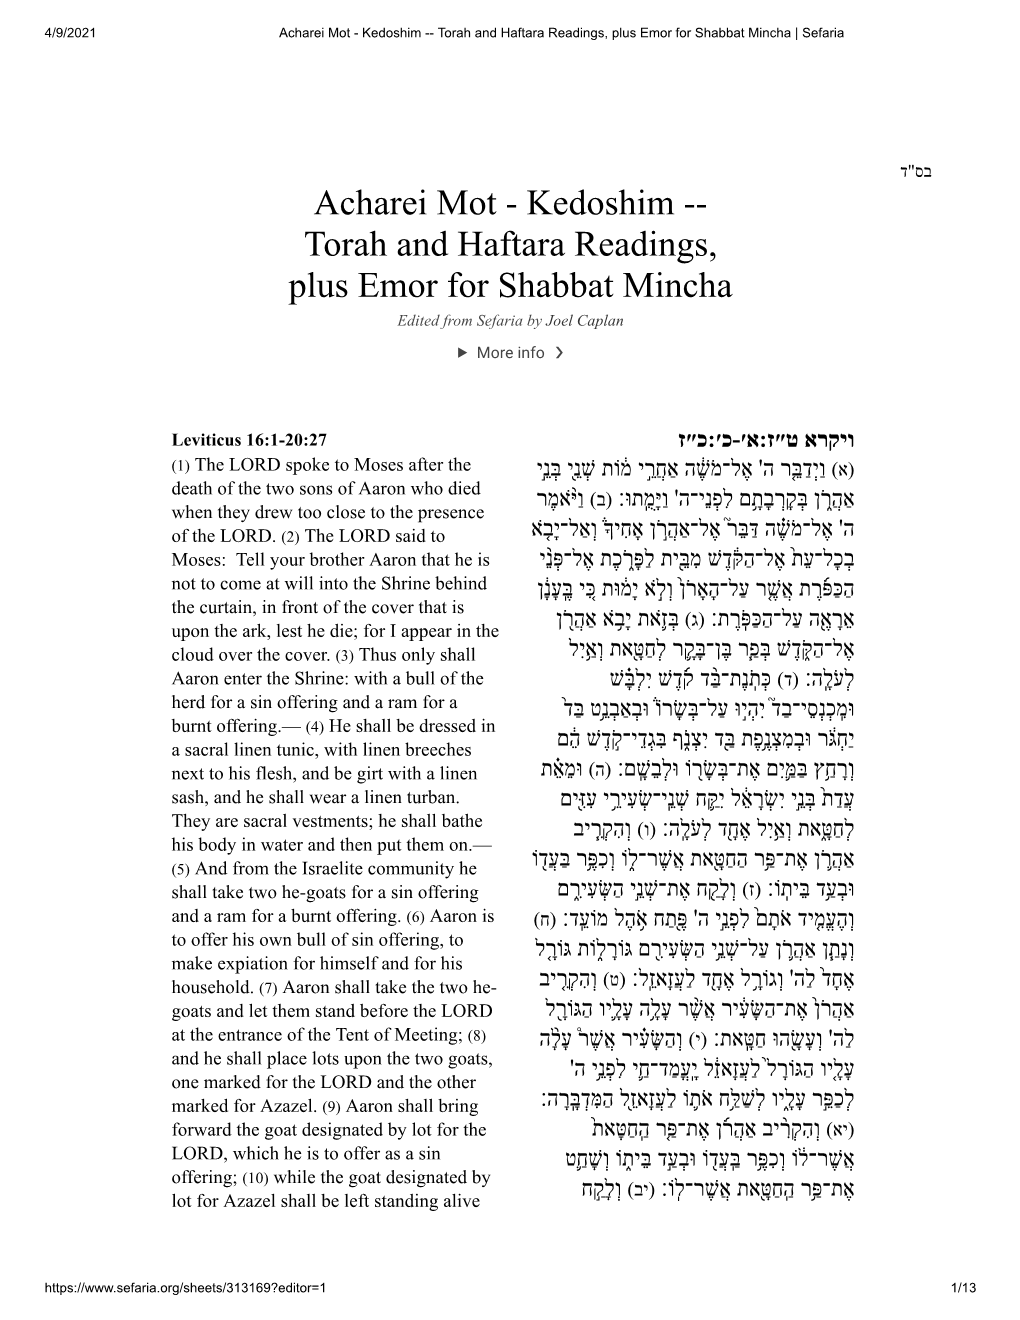 Acharei Mot - Kedoshim -- Torah and Haftara Readings, Plus Emor for Shabbat Mincha | Sefaria